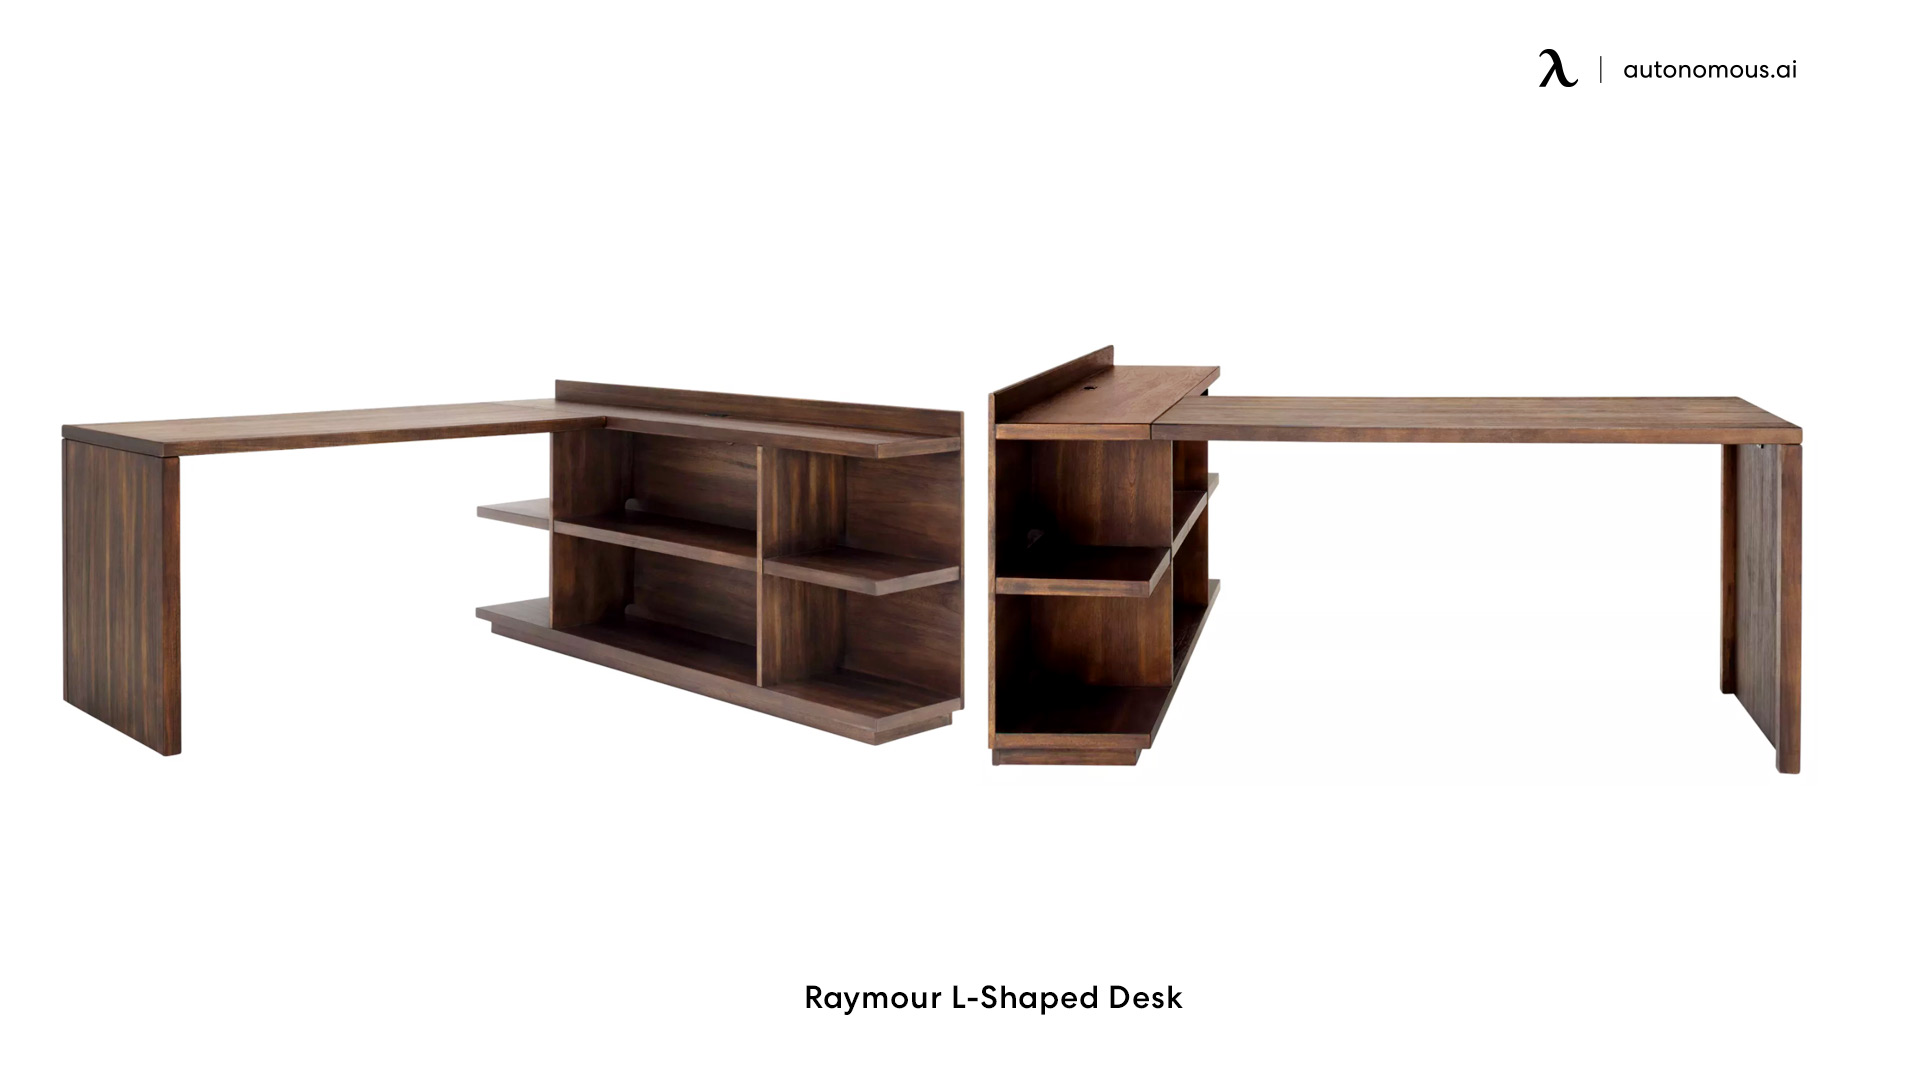 Raymour L-Shaped Desk